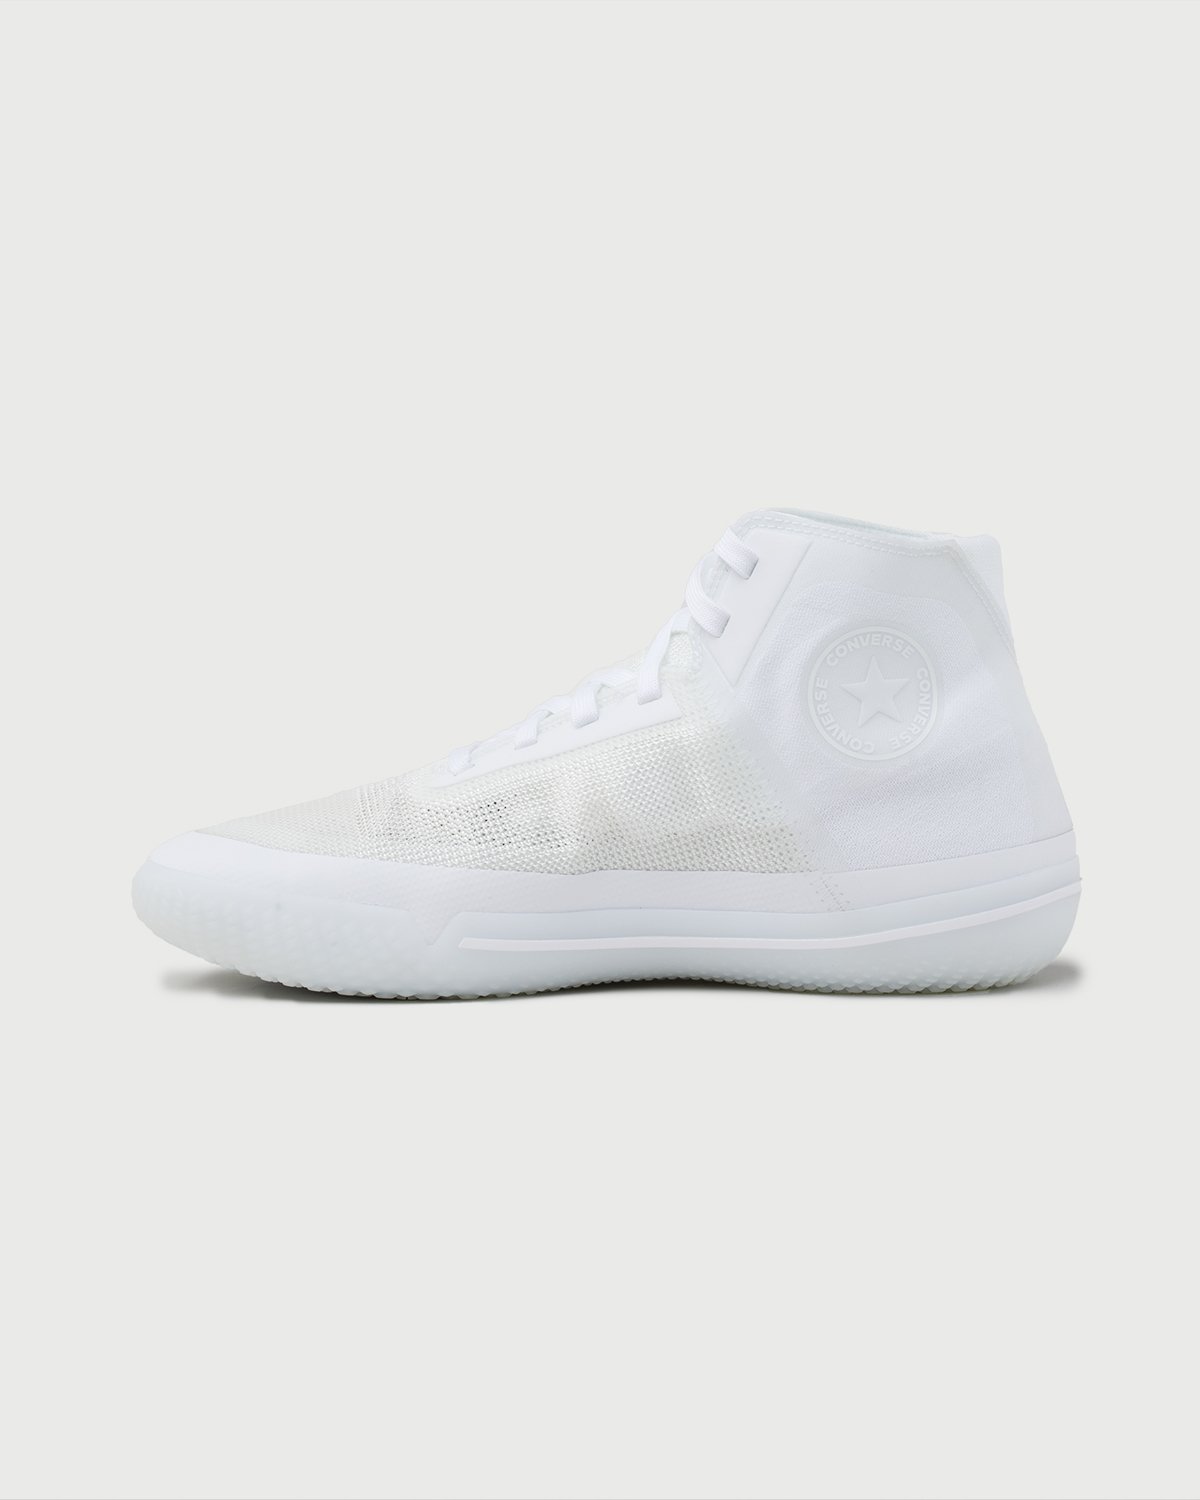 Converse - All Star Pro Bb Hi White - Footwear - White - Image 5